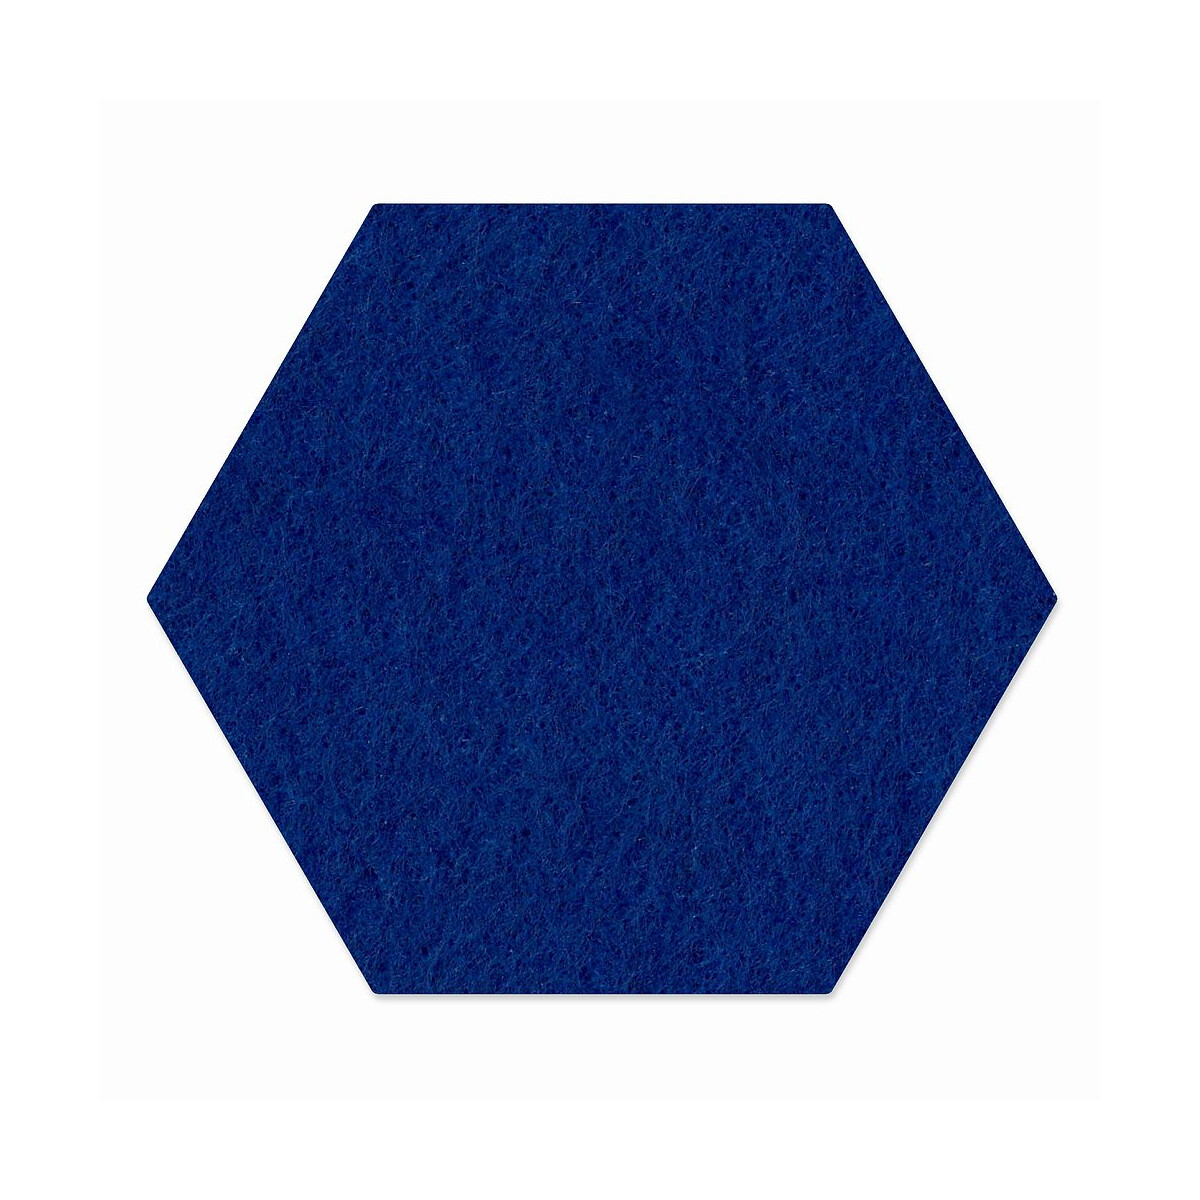 1 x FILZ Untersetzer Wabe, Hexagon 21 cm - dunkelblau